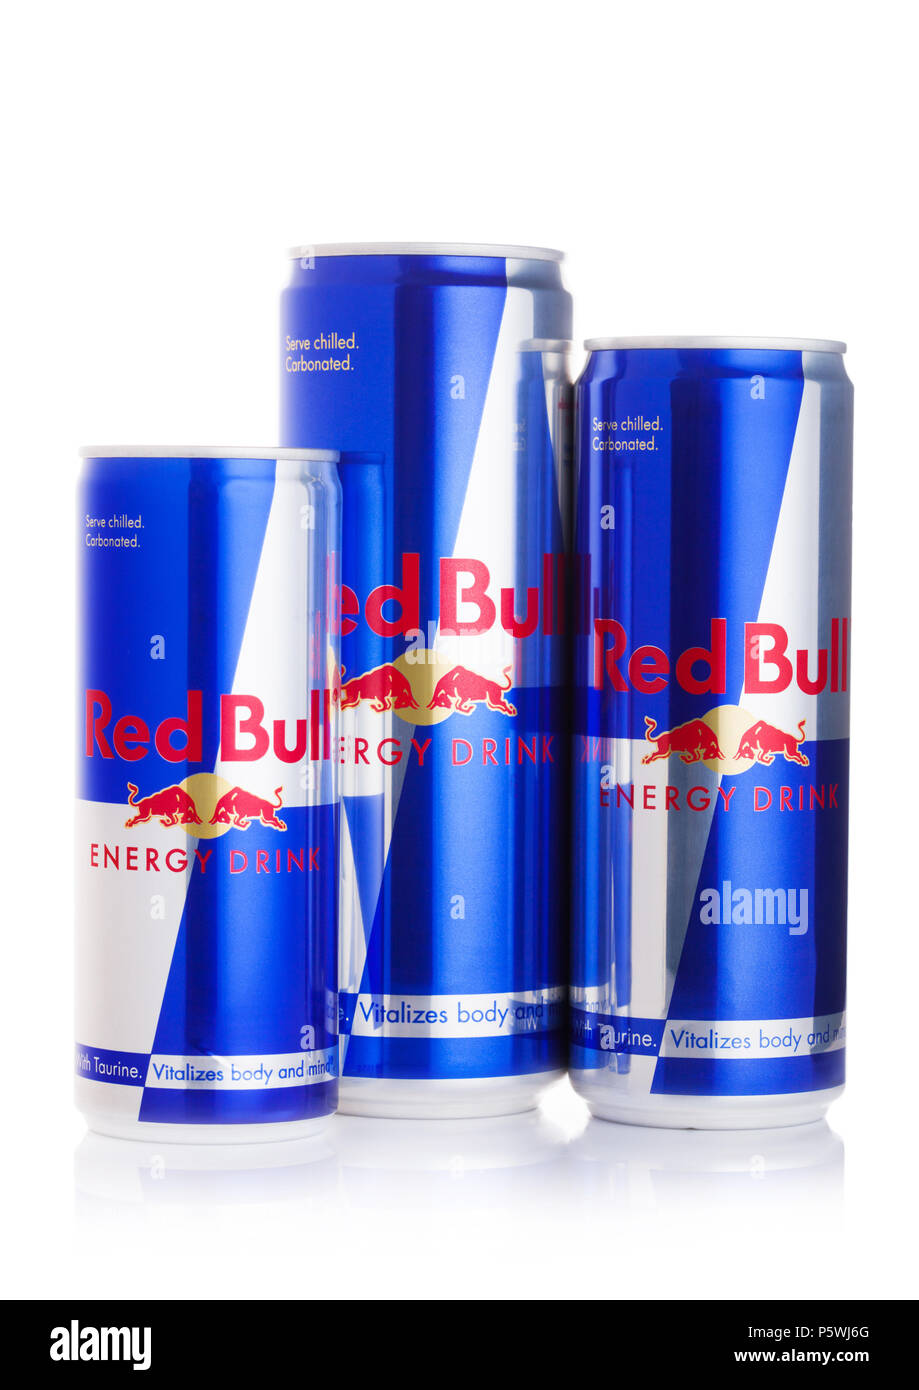 LONDON, UK - 23. JUNI 2018: Aluminium Dosen Red Bull Energy Drink auf Weiß. Red Bull ist die beliebteste Energy Drink der Welt. Stockfoto